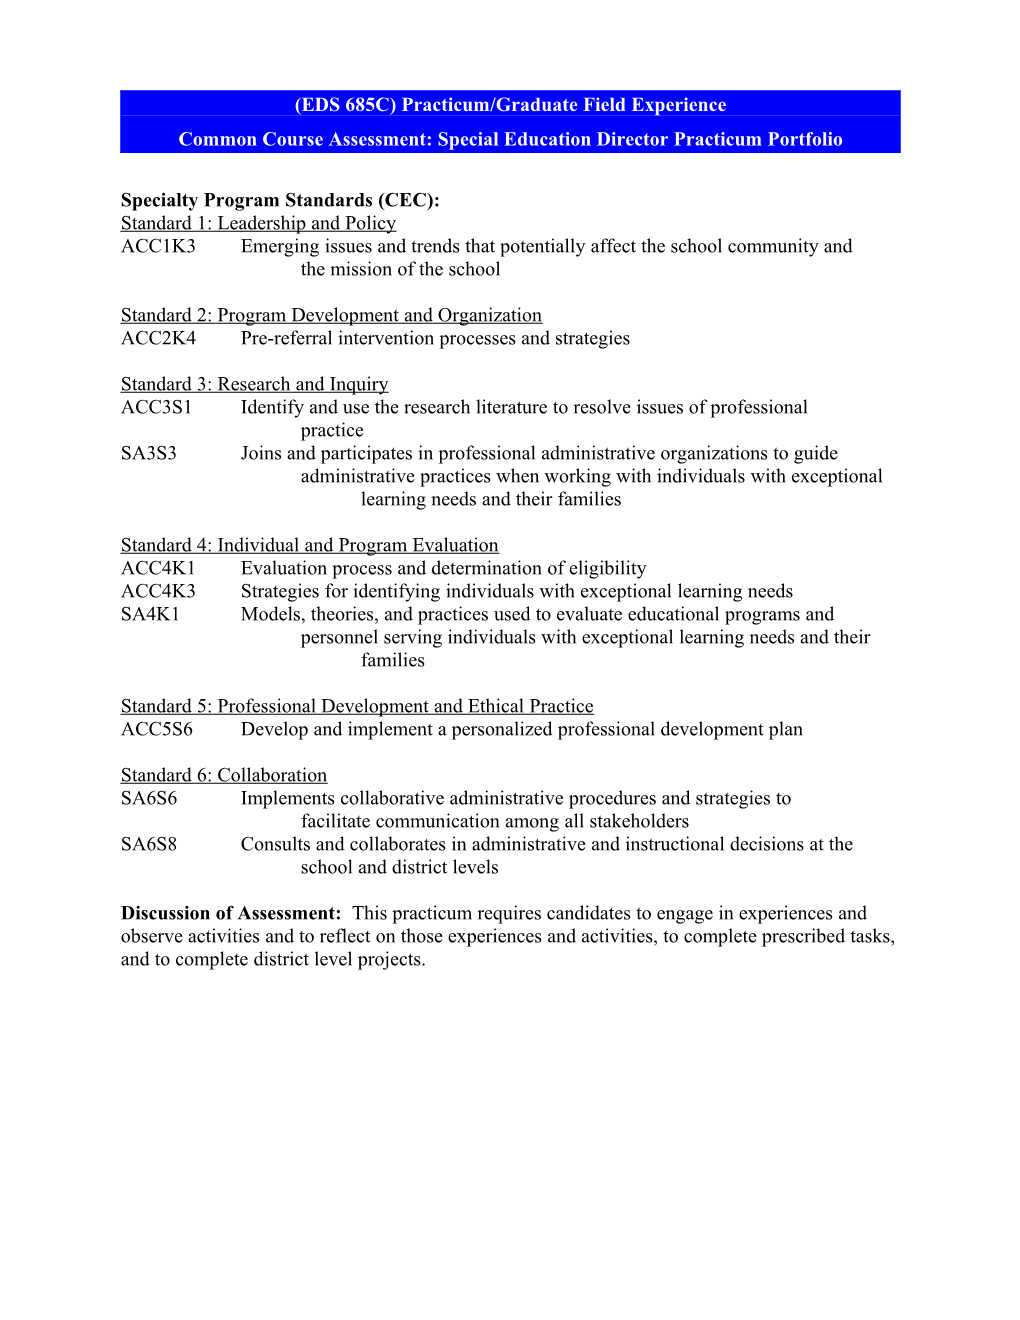 EDS 685 a Common Course Assessment: Special Education Supervisor Practicum